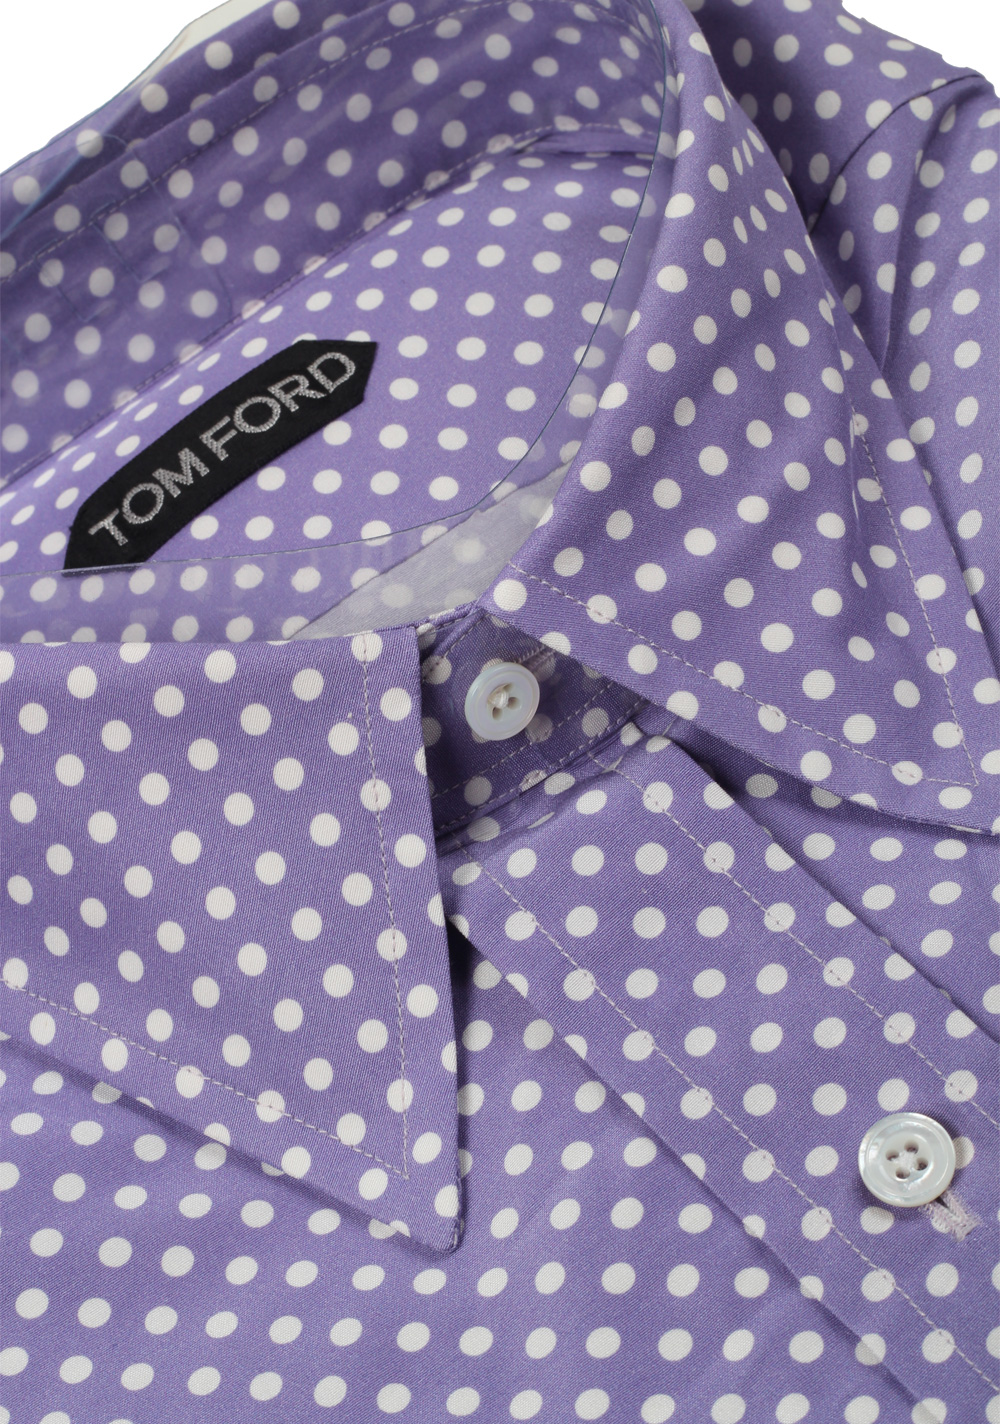 TOM FORD Patterned Lilac Dress Shirt Size 42 / 16,5 U.S. | Costume Limité